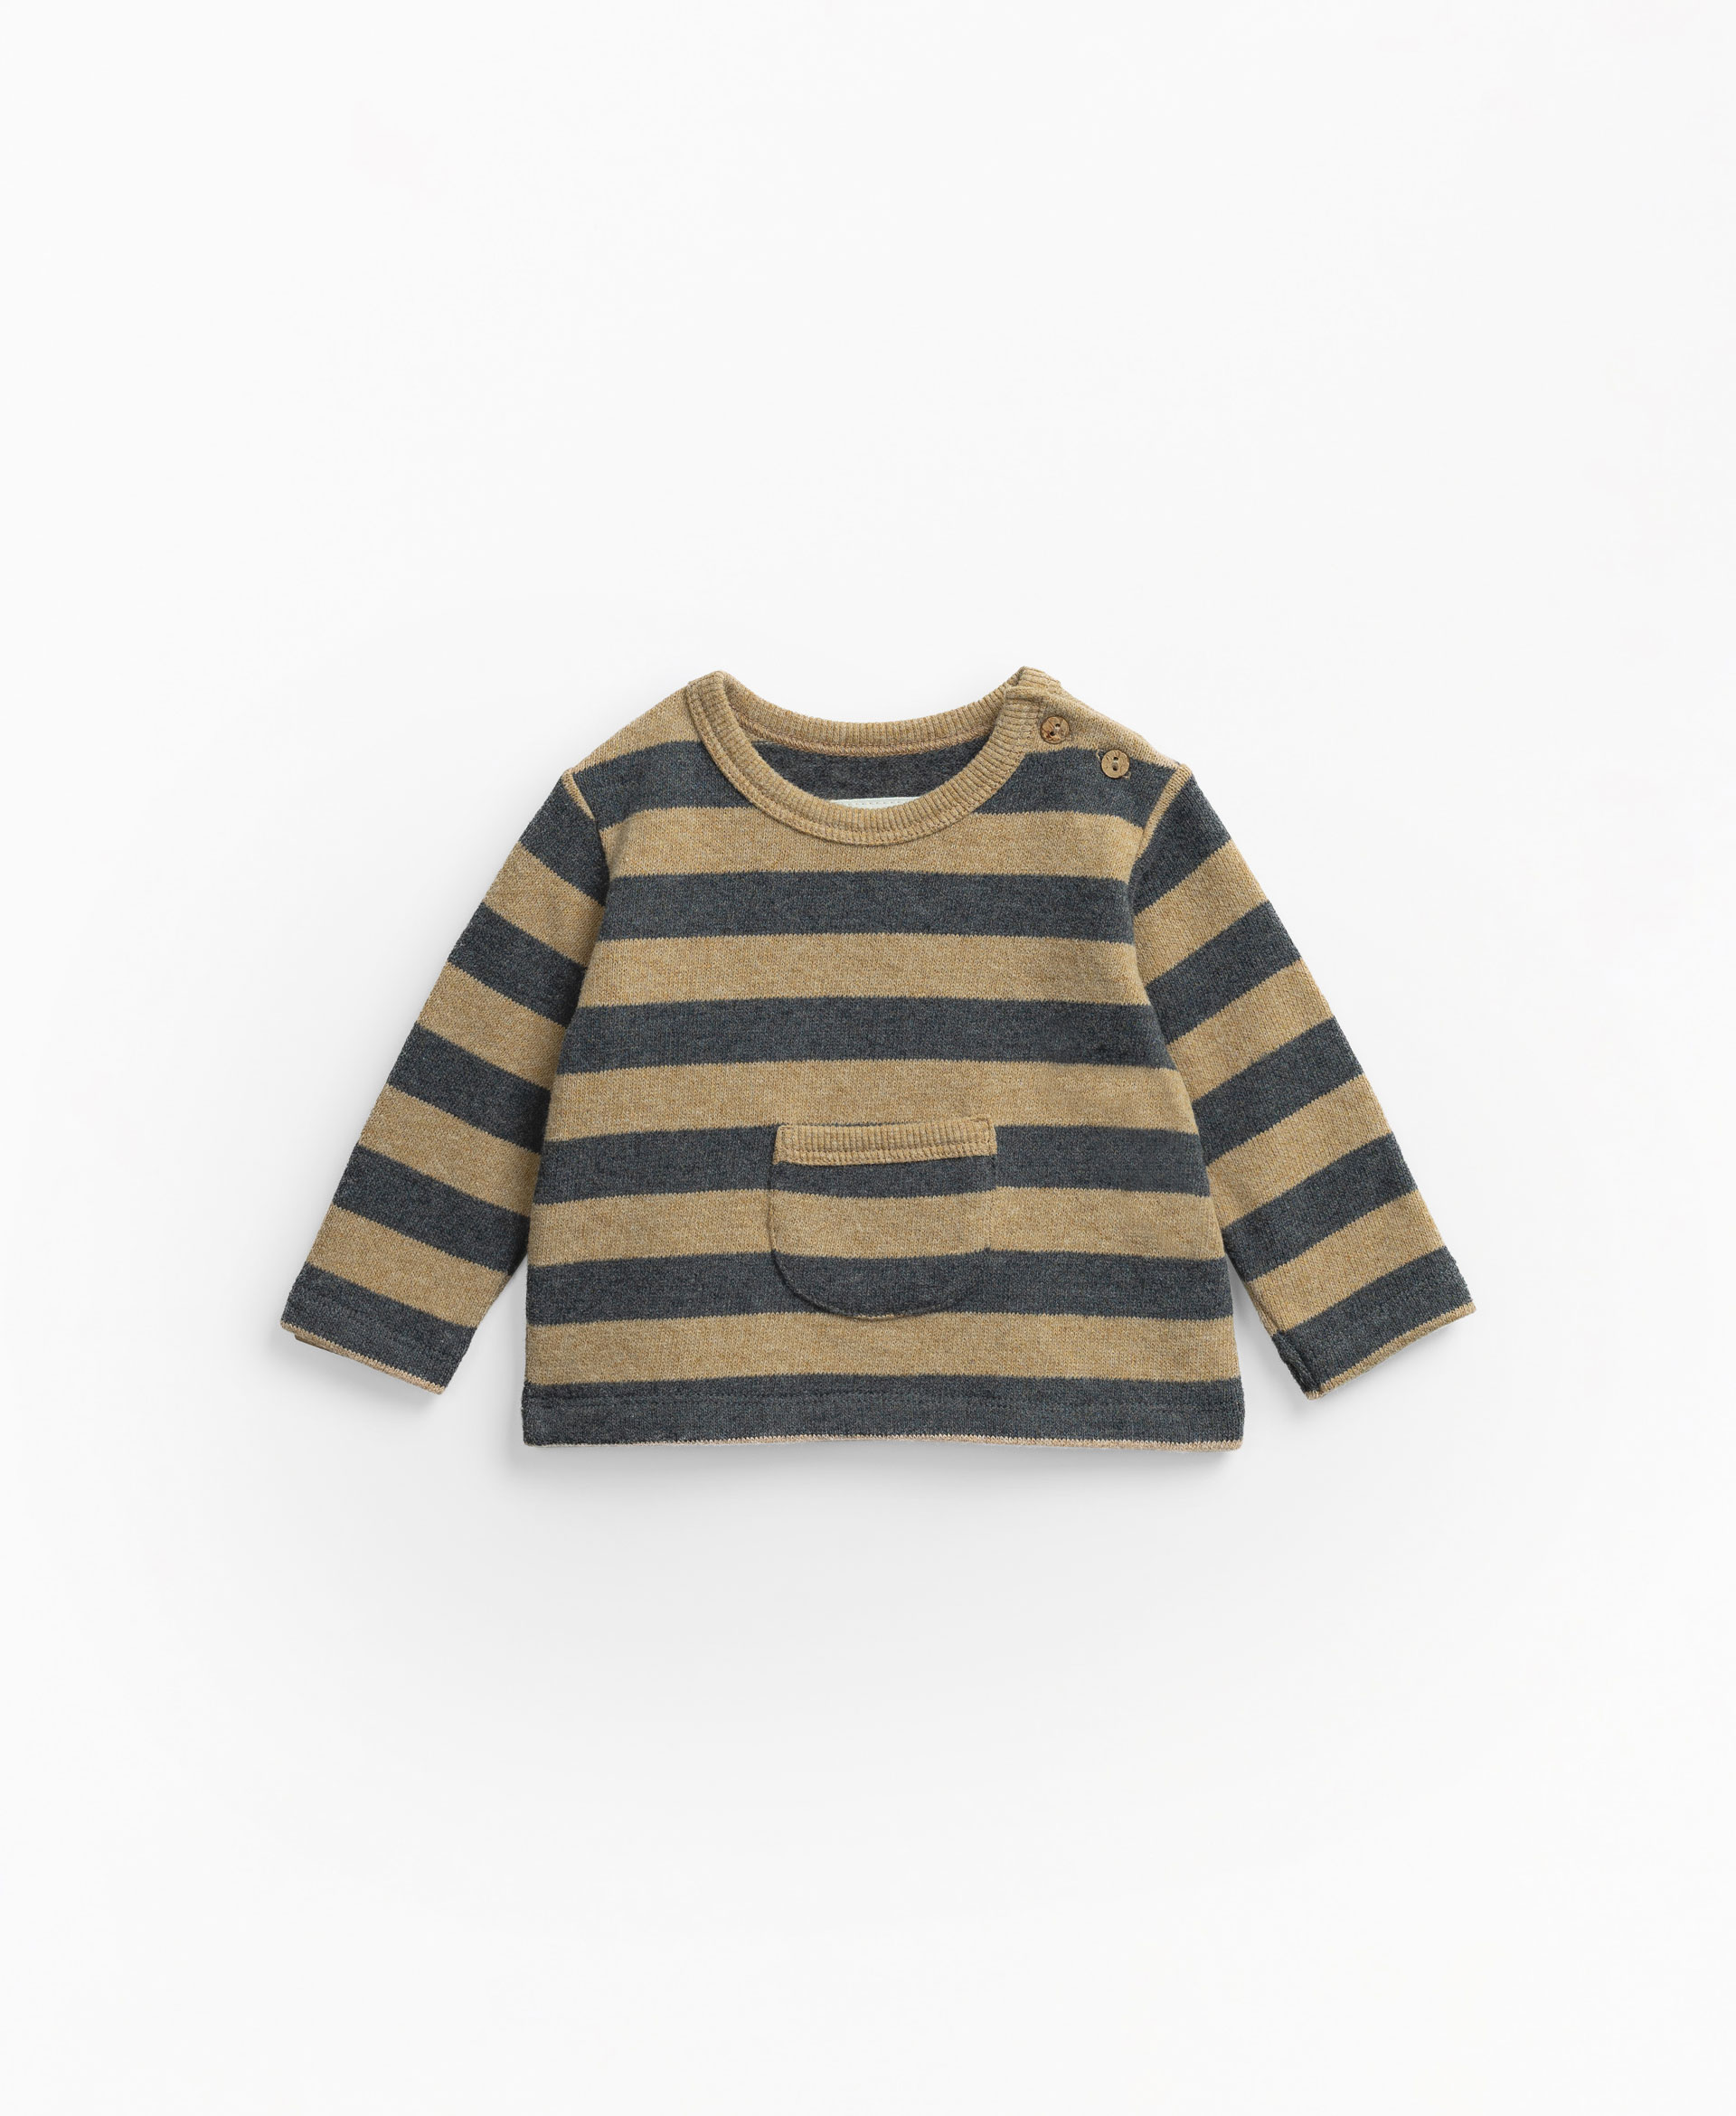 Woven striped jersey | Mother Lúcia